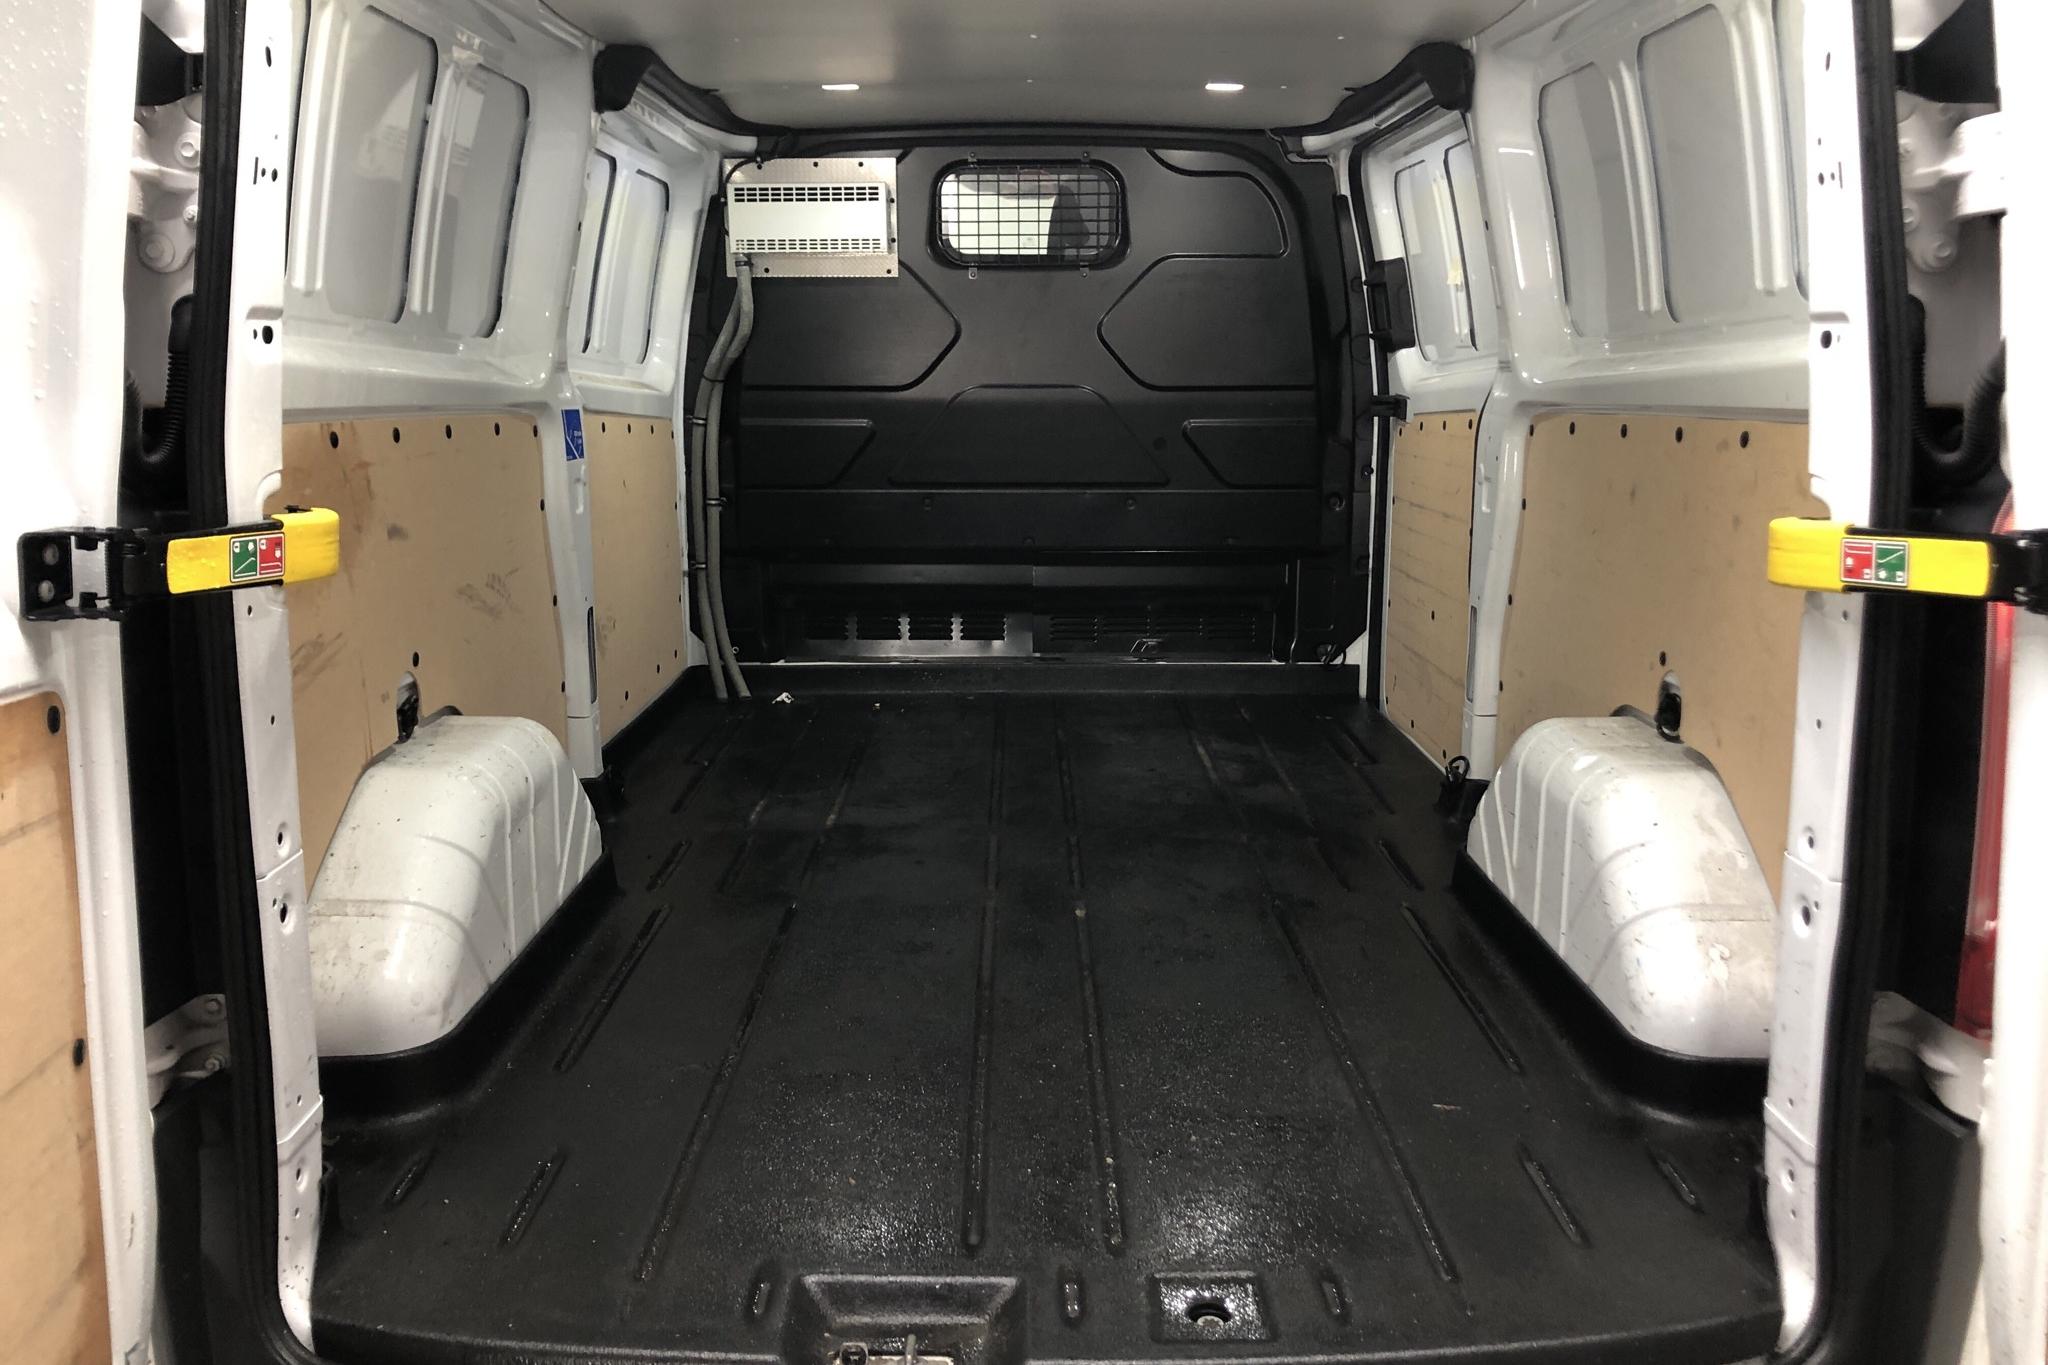 Ford Transit Custom 290 (105hk) - 95 830 km - Manual - white - 2018